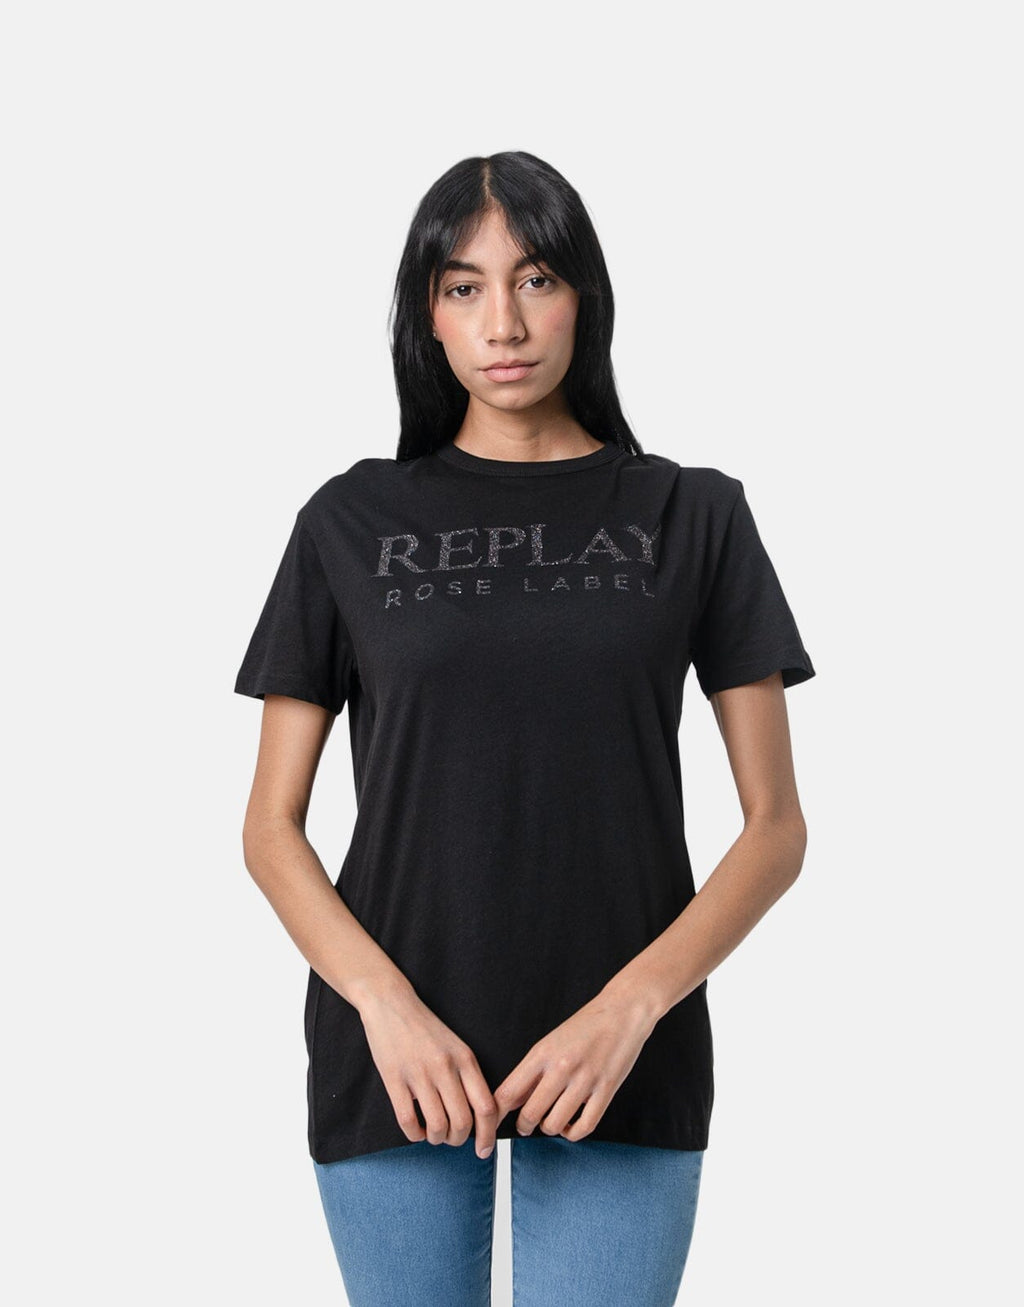 Replay Rose Label Black T-Shirt